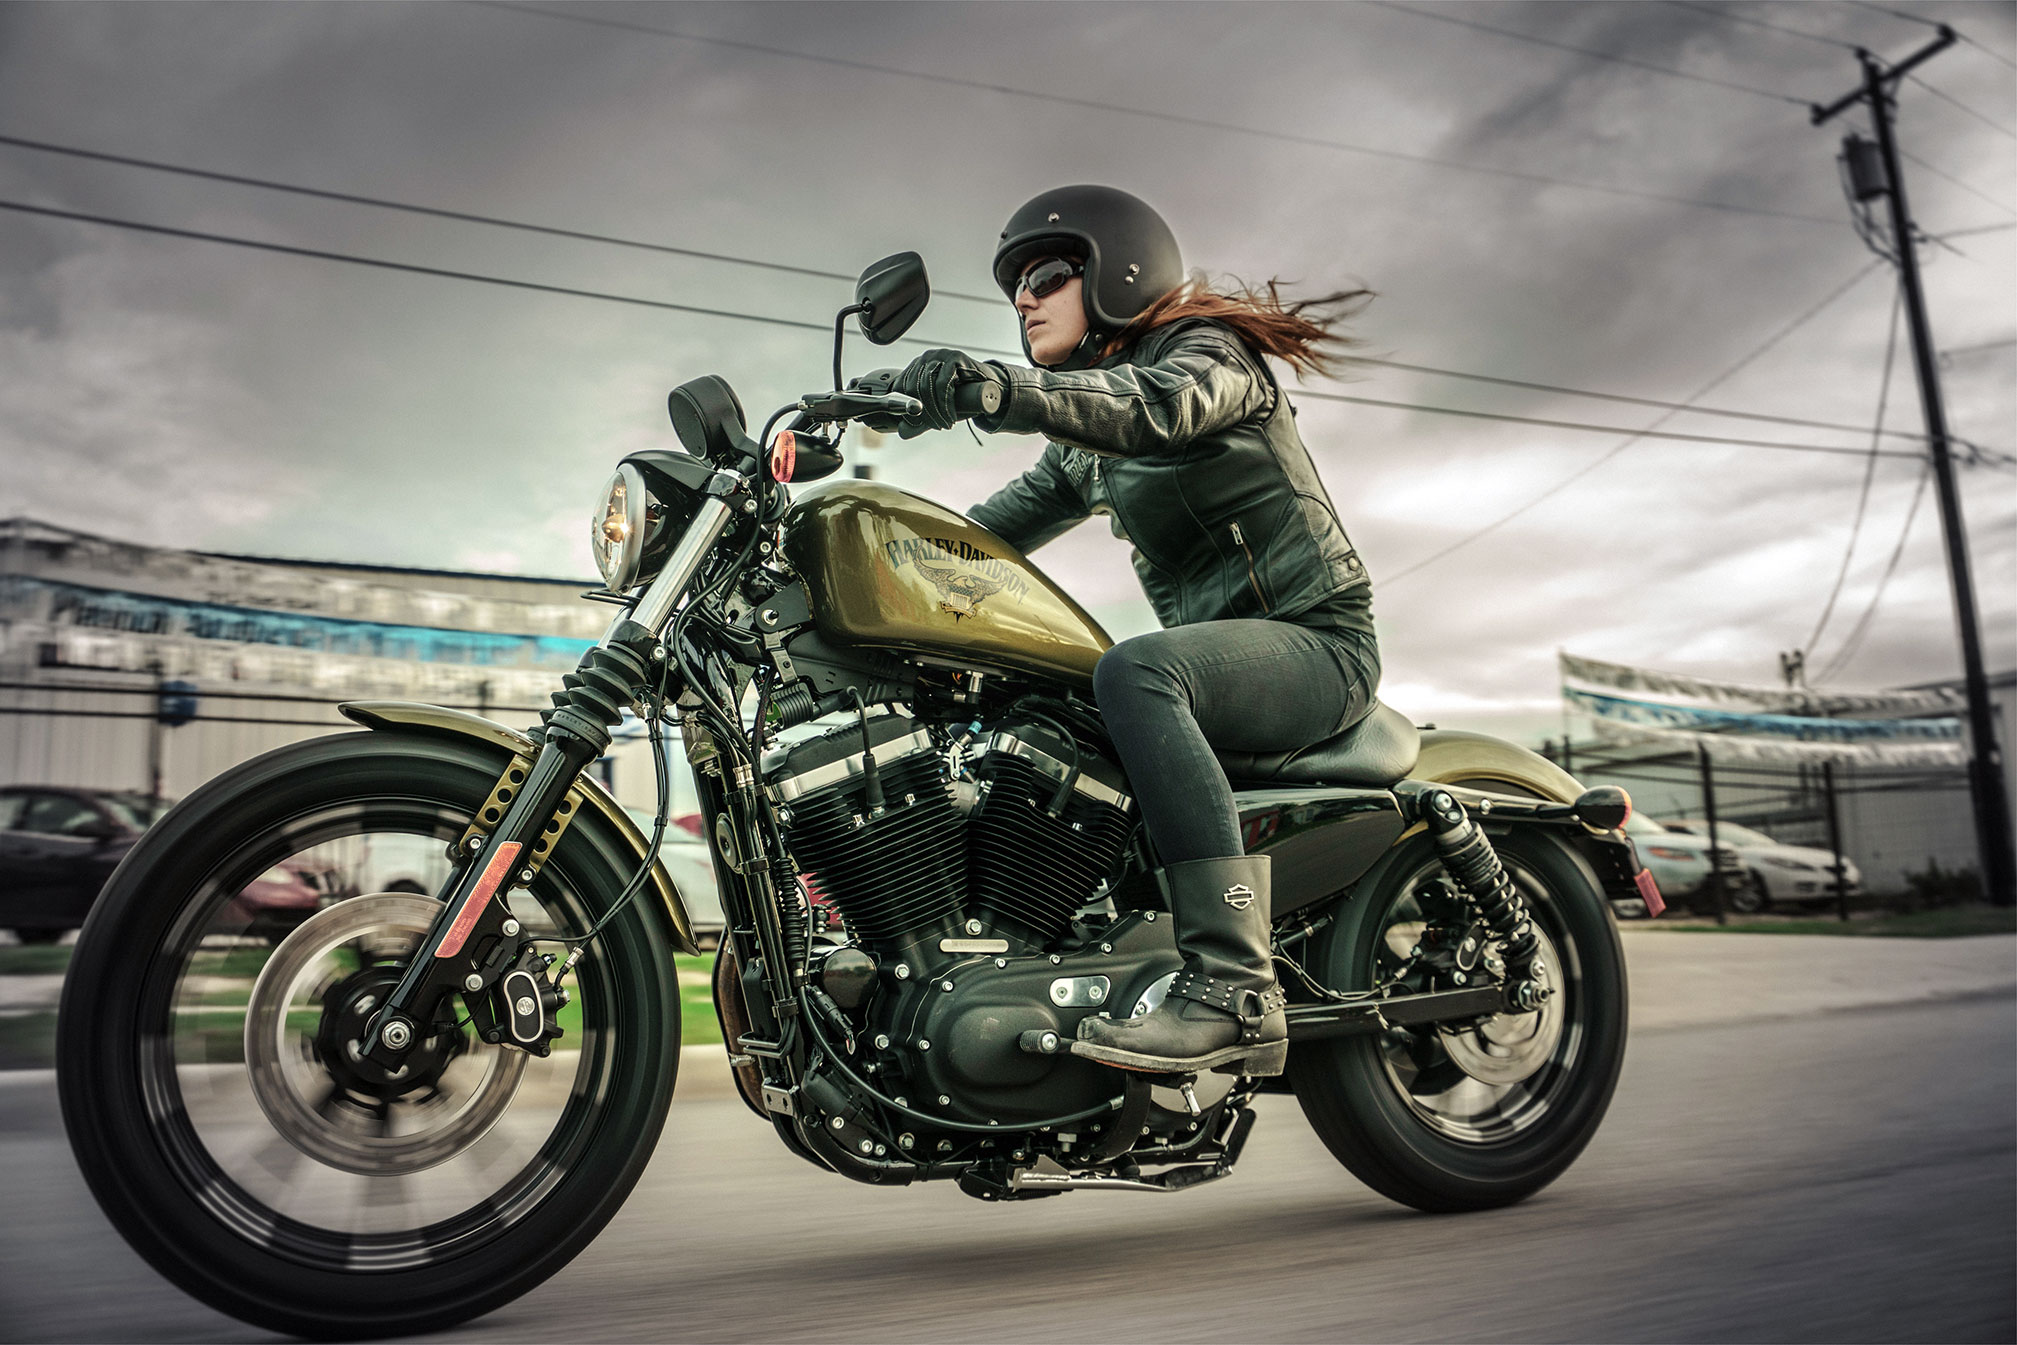 2017 Harley Davidson Iron 883 Review